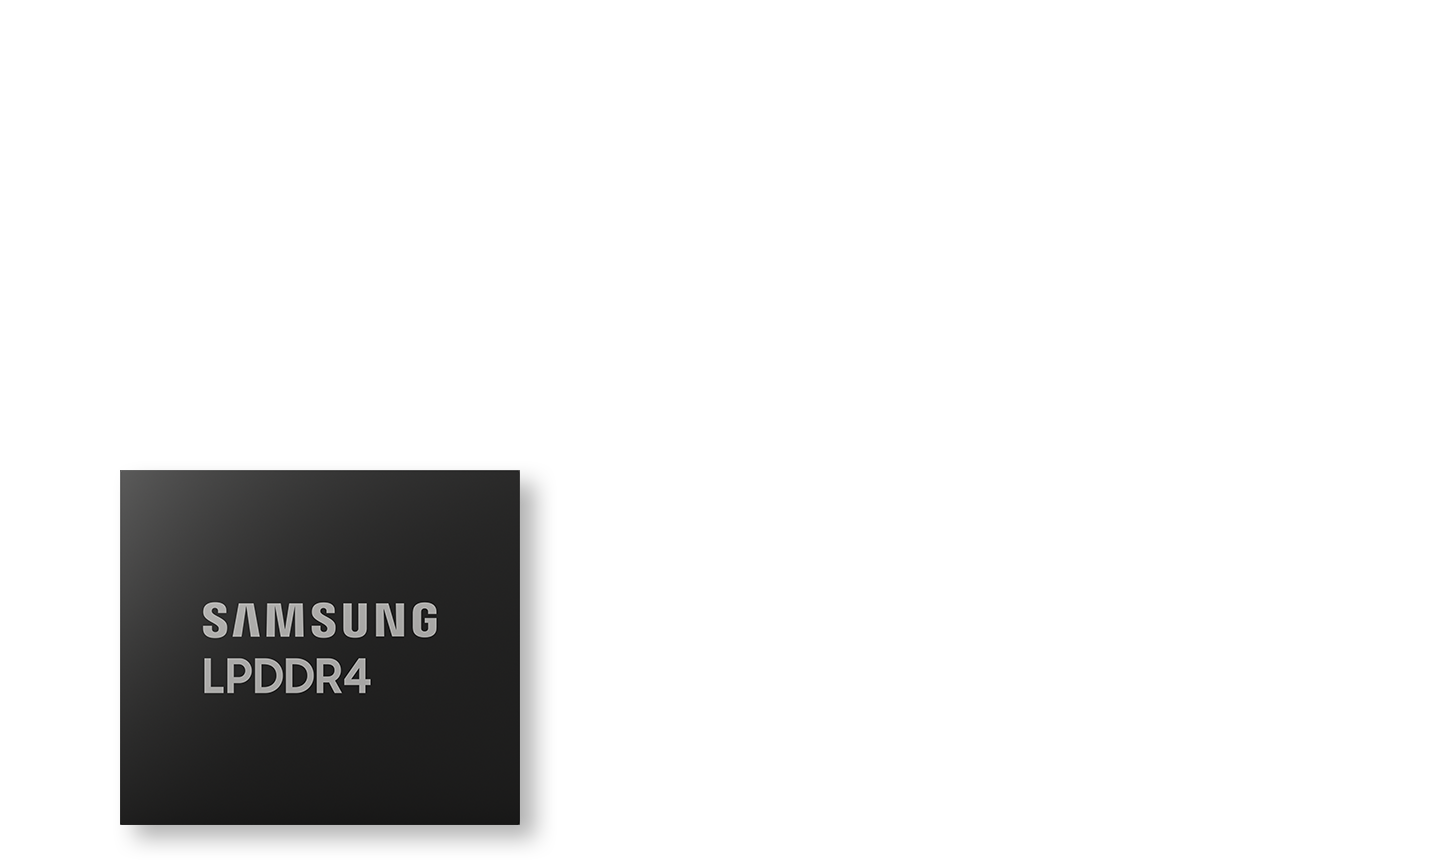 Samsung LPDDR4 against an image of a fingerprint authenticator.